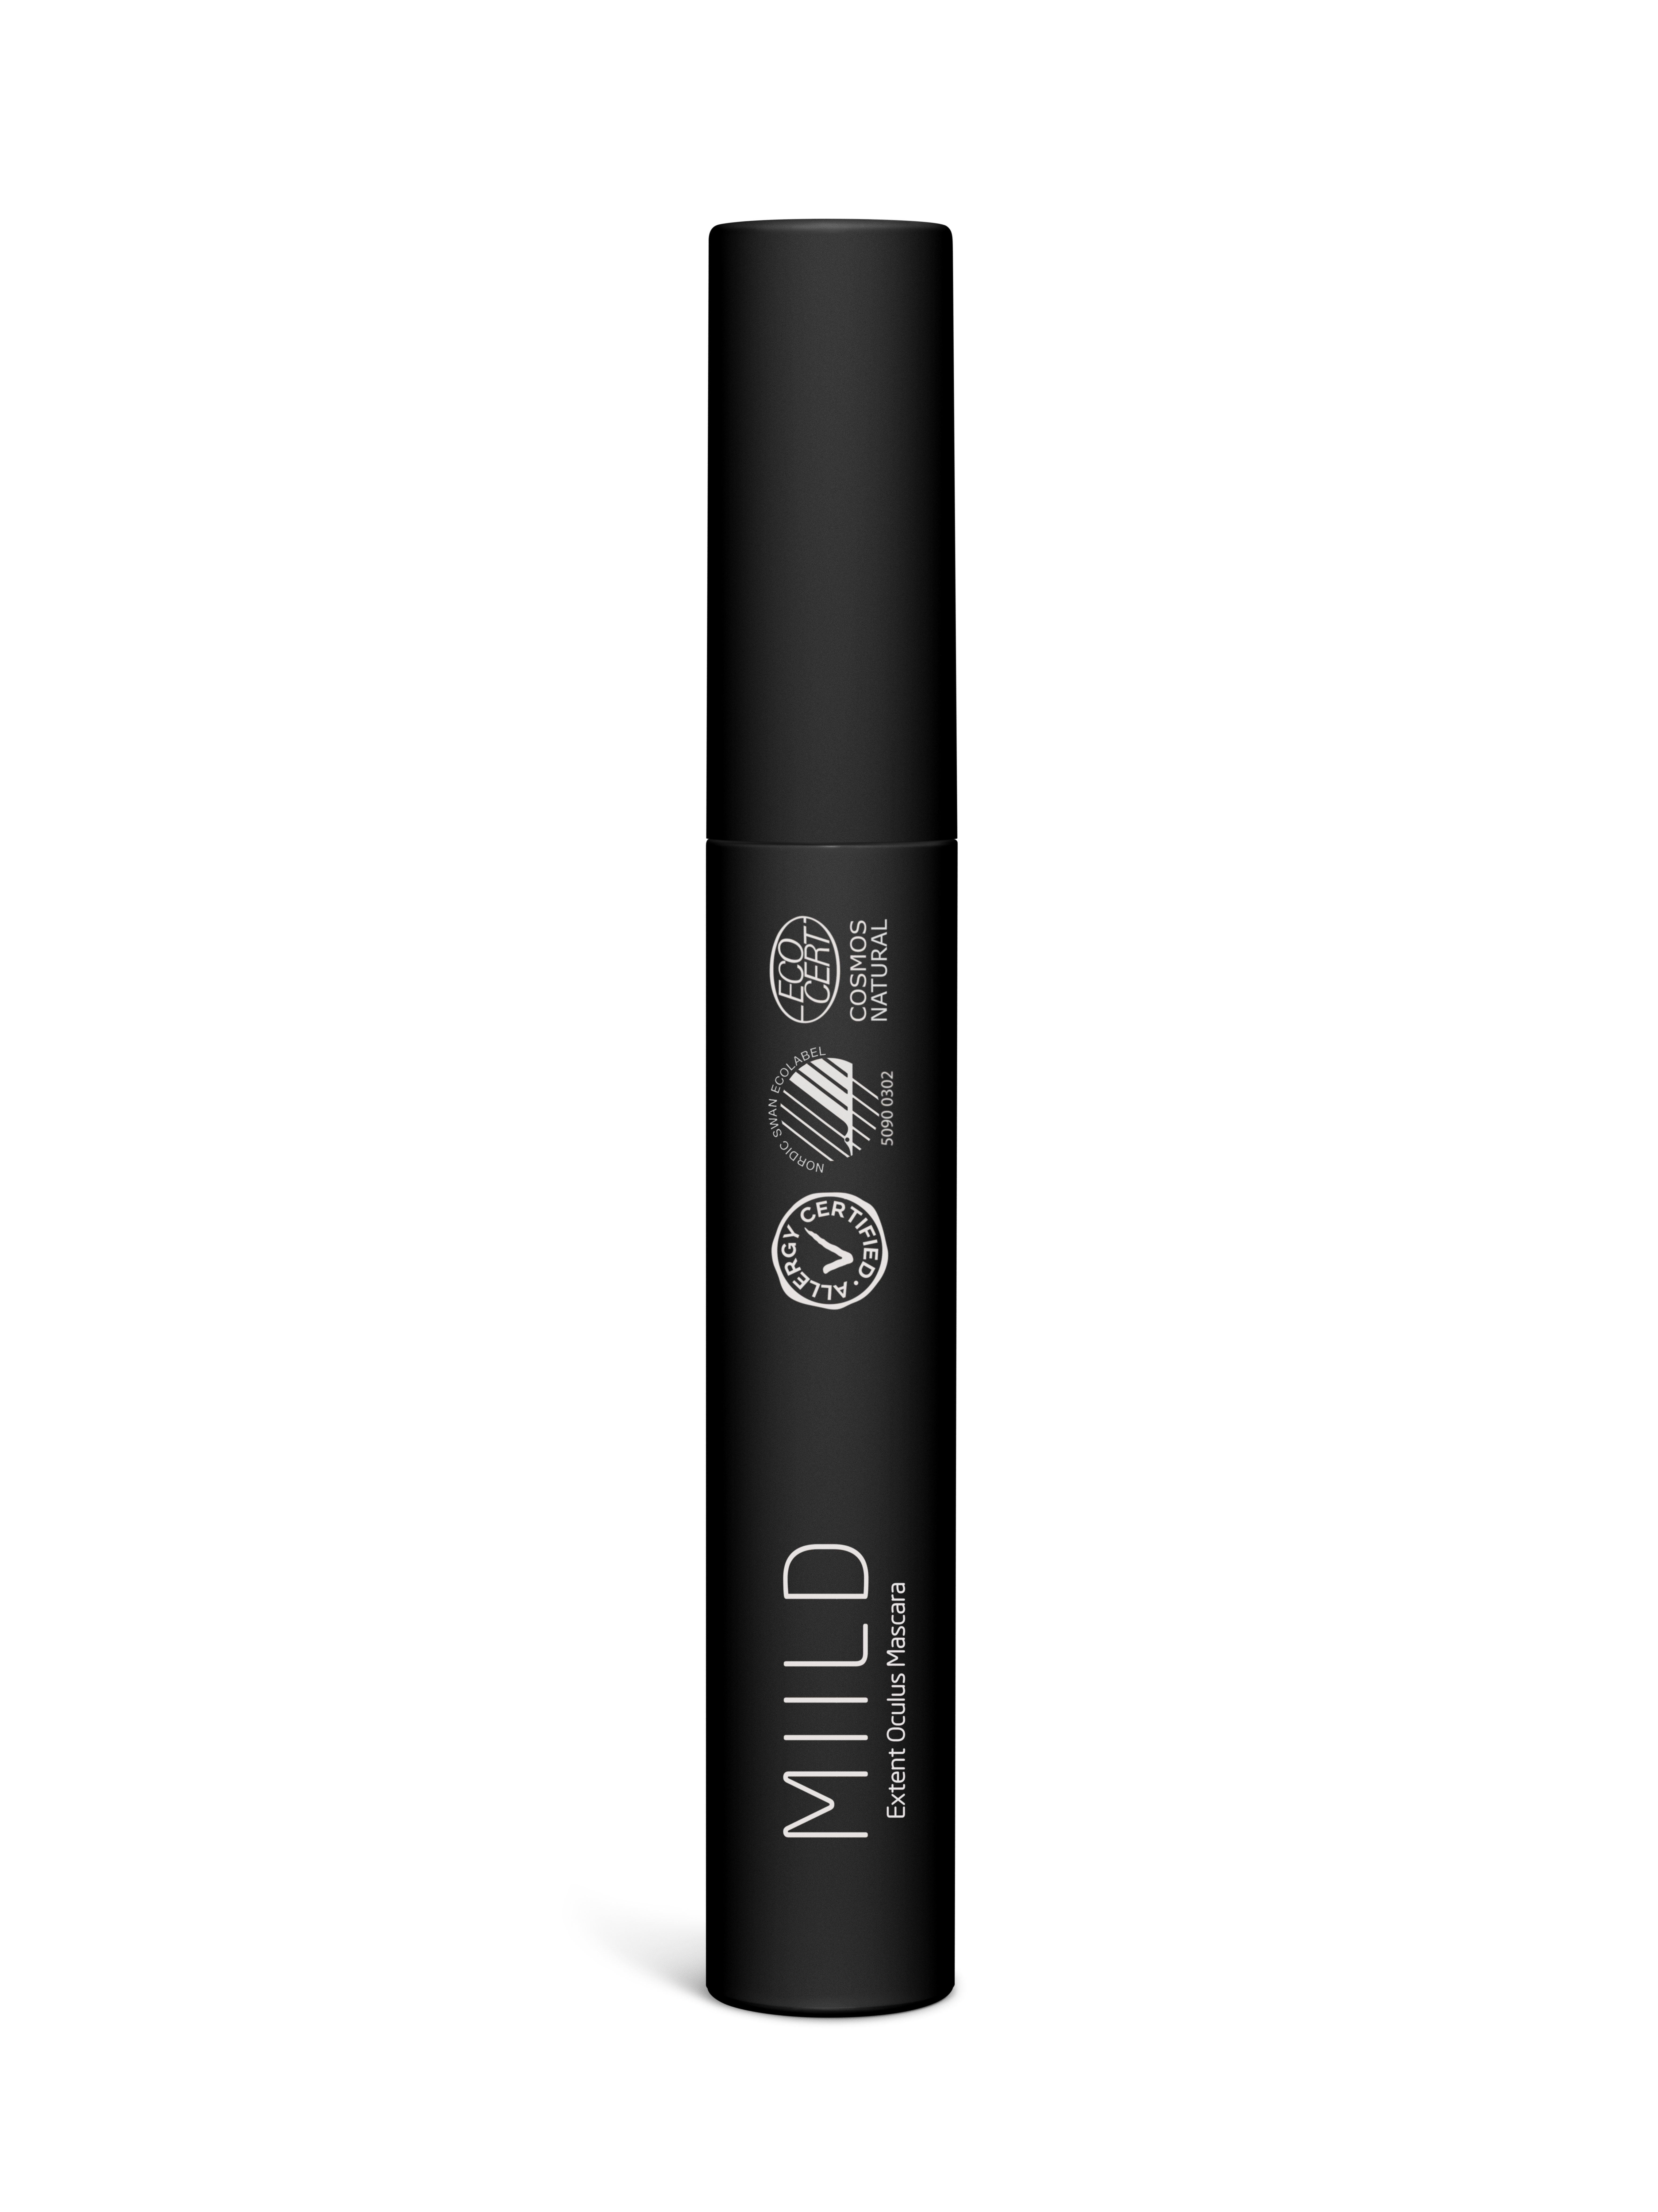 Miild Tear-Proof Extent Oculus Mascara, 01 Black